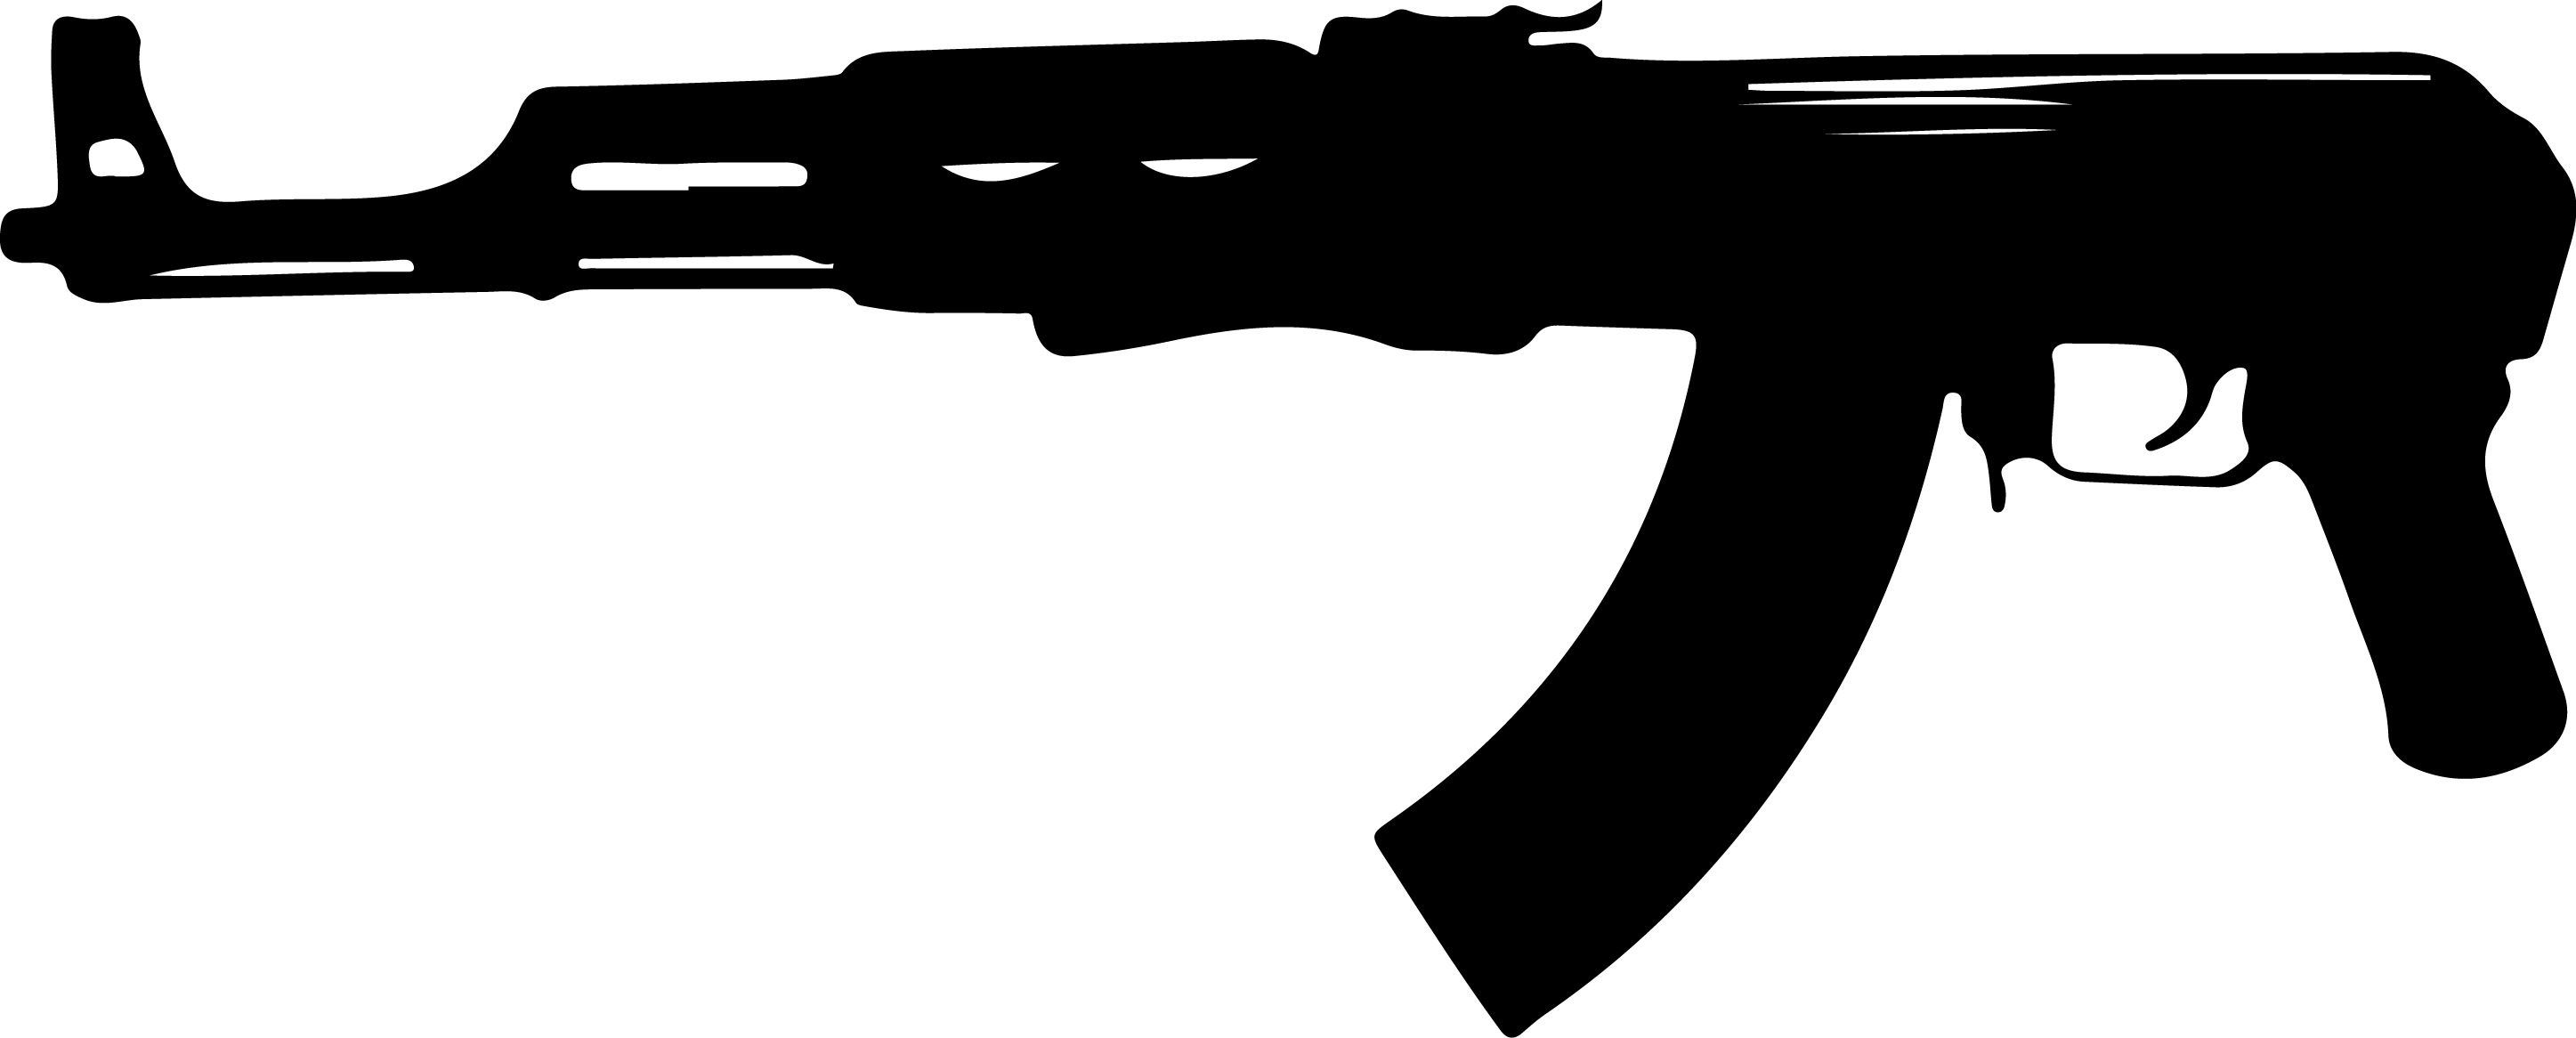 AK-47 Logo - AK 47 PNG Image Free Download, Kalashnikov PNG